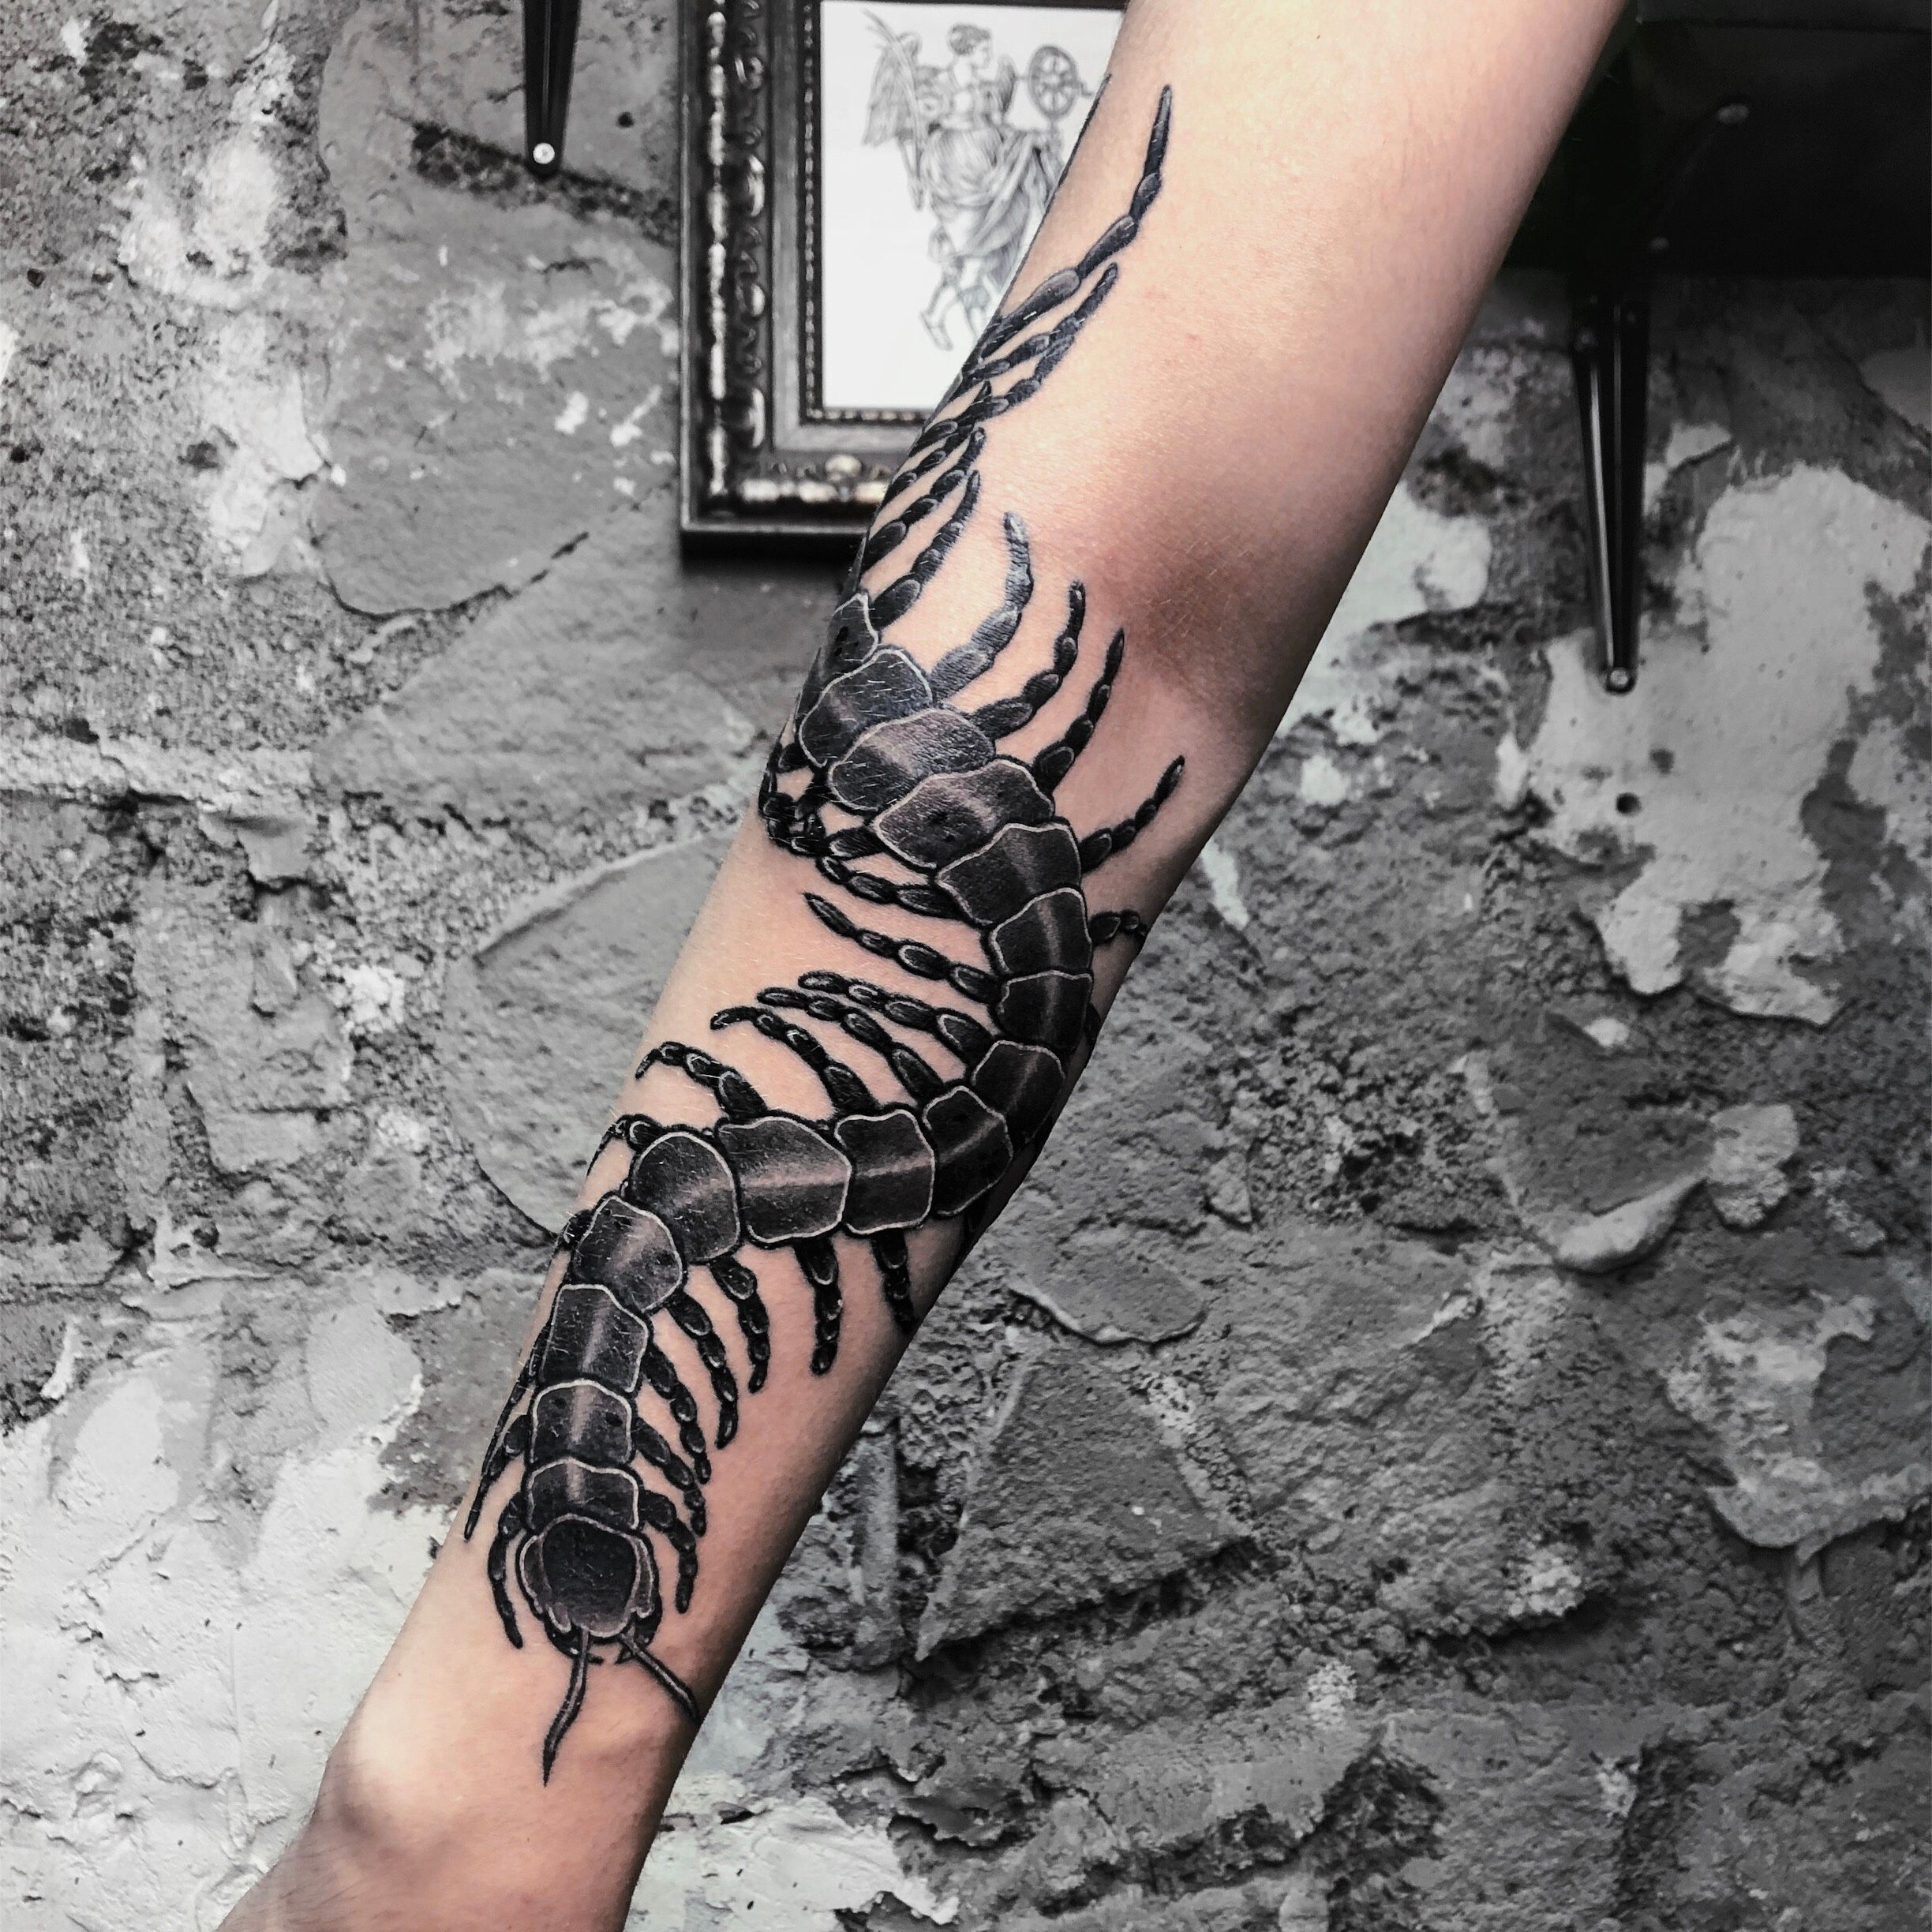 traditional centipede tattoo